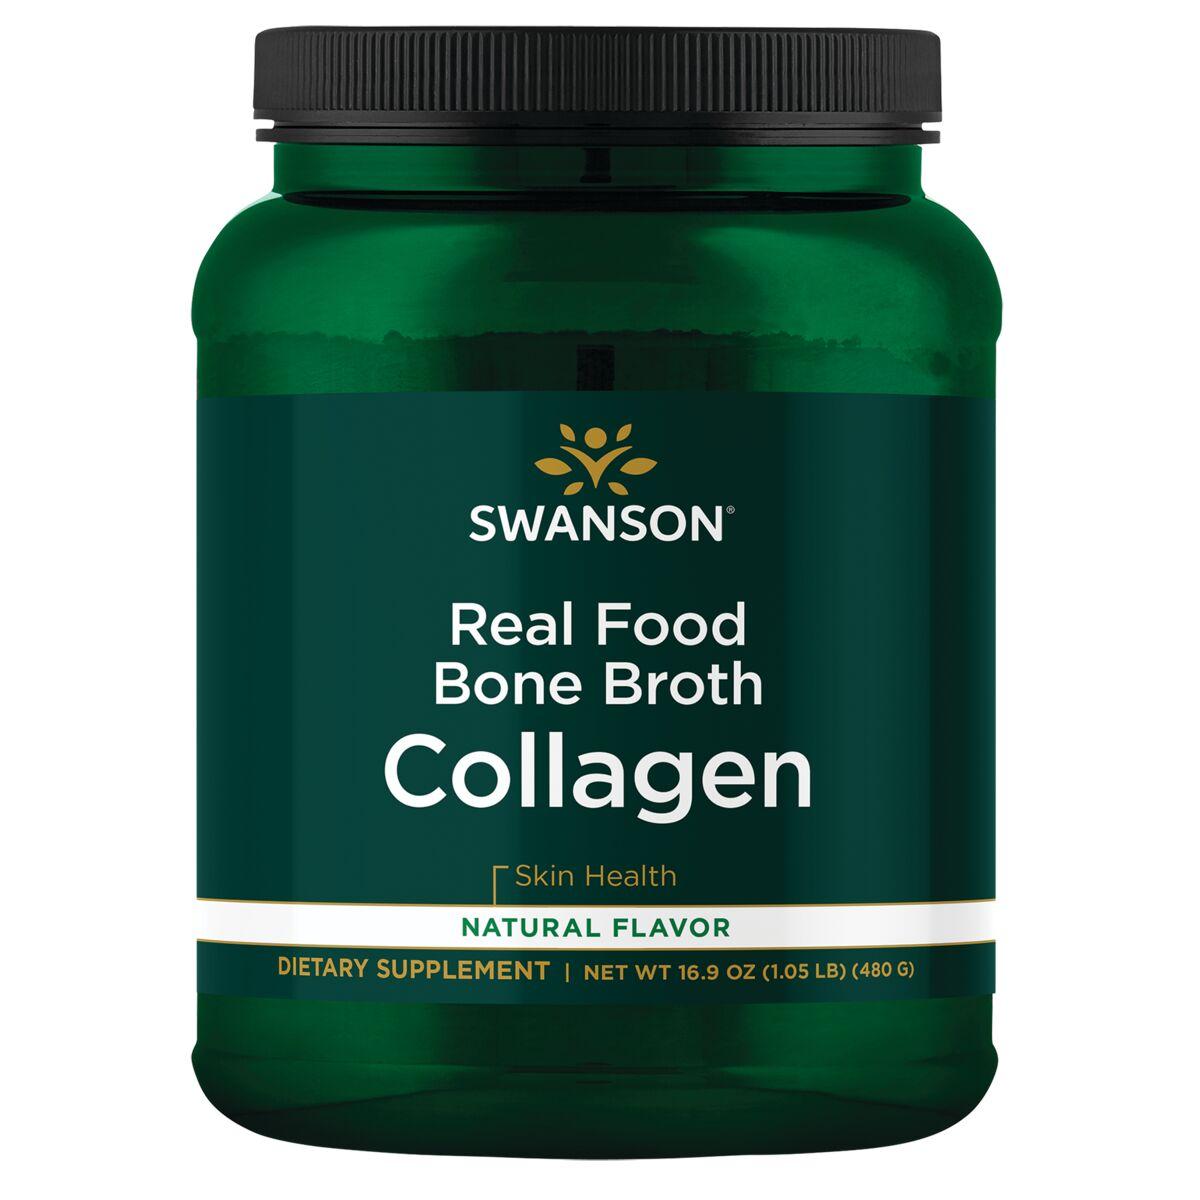 Swanson Ultra Real Food Bone Broth Collagen - Natural Flavor Supplement Vitamin | 16.9 oz Powder